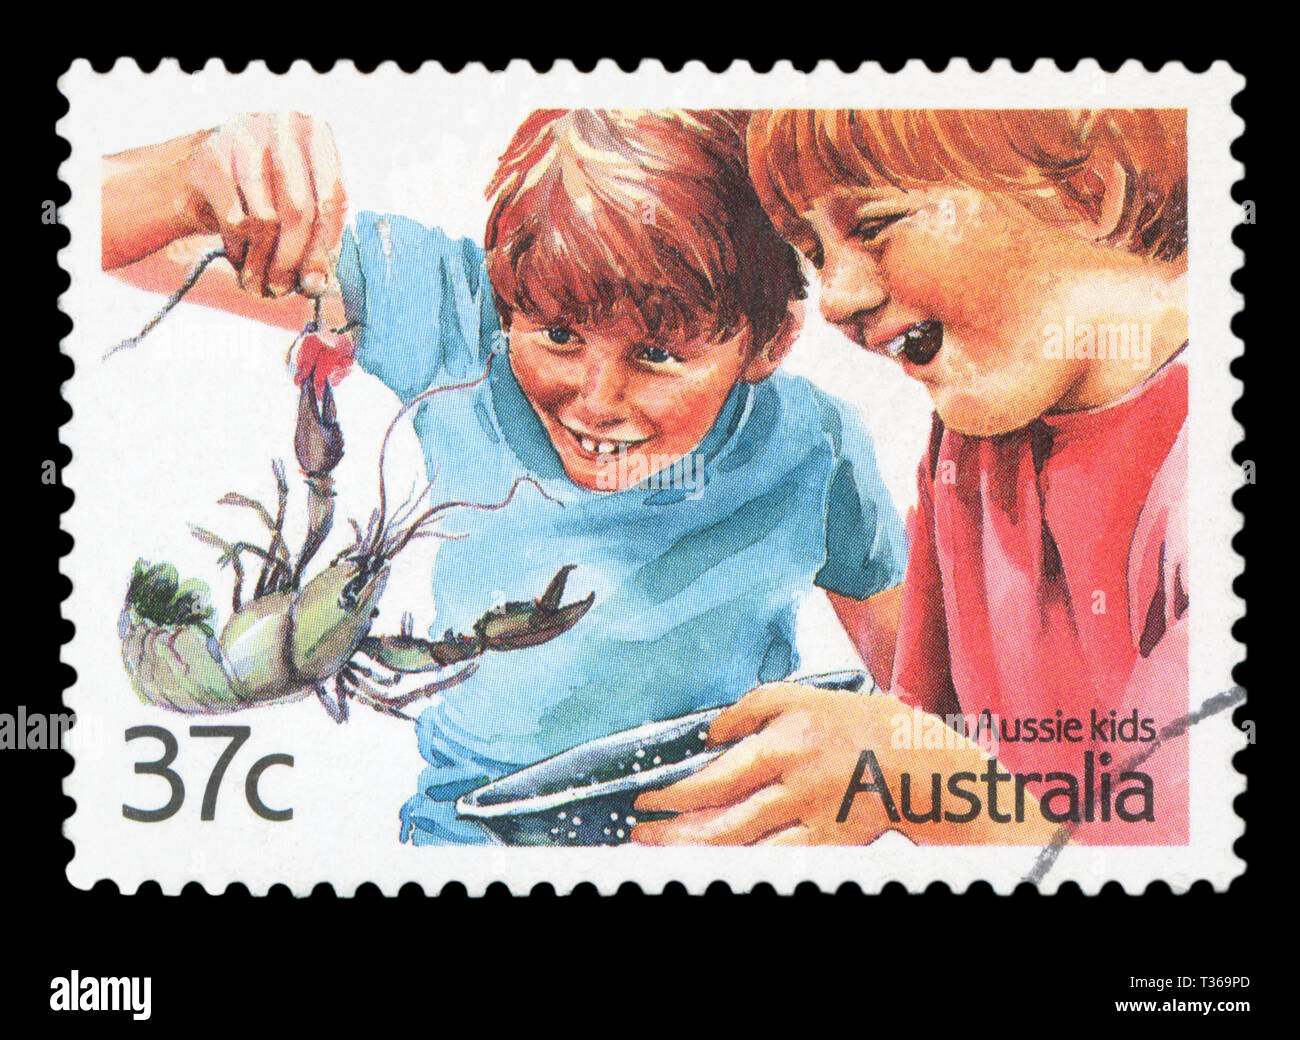 Australien - ca. 1987: einen Stempel in Australien gedruckten zeigt den Krebsfang, Aussie Kids, ca. 1987 Stockfoto